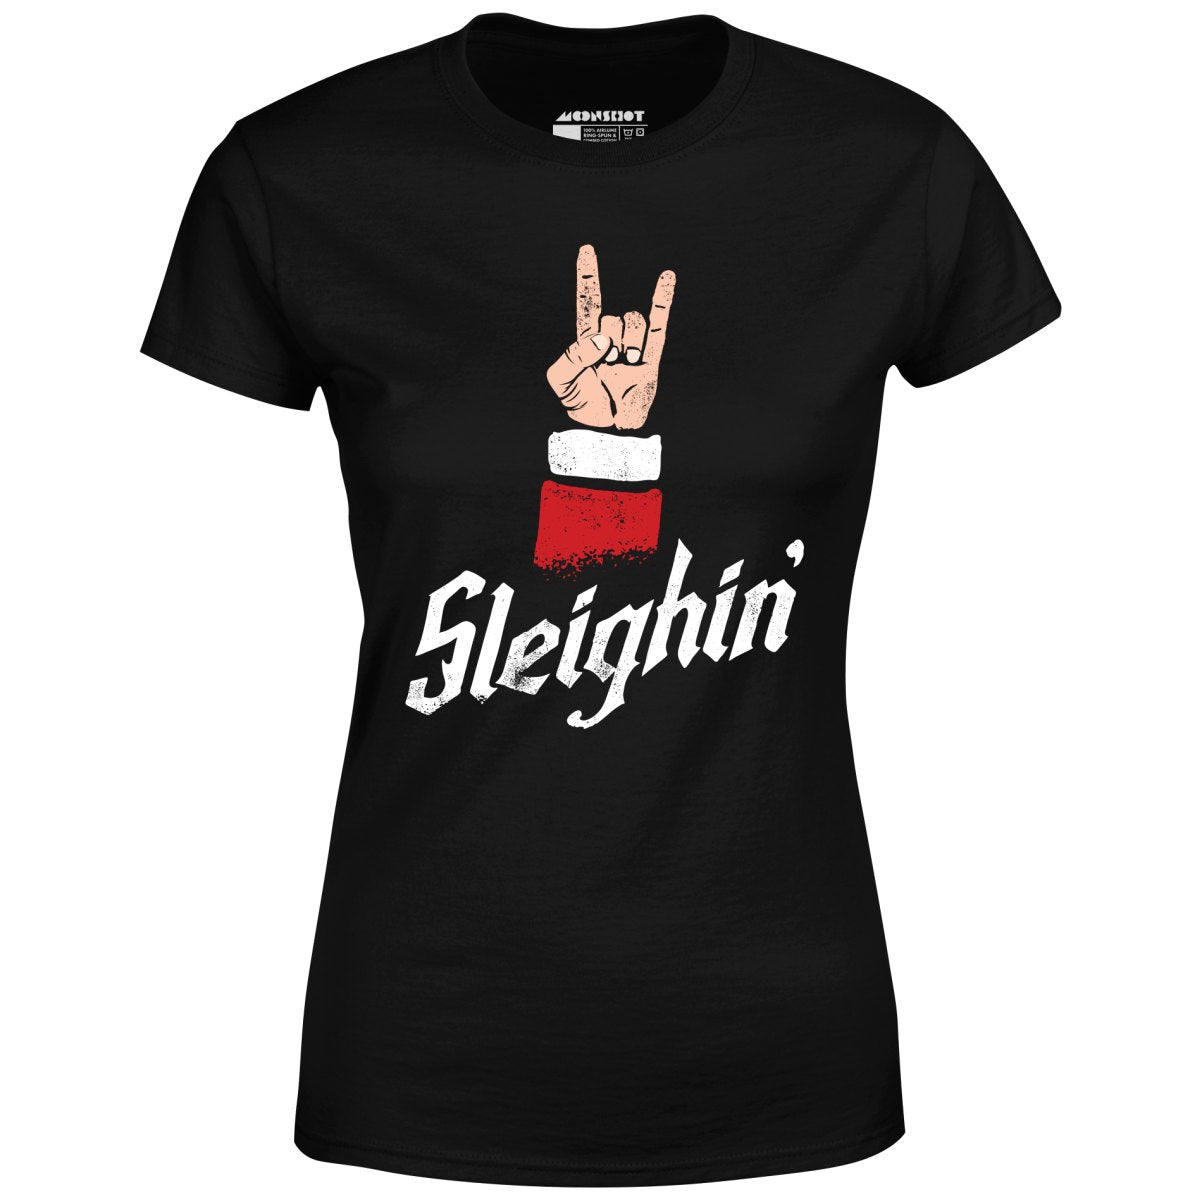 Sleighin' - Women's T-Shirt